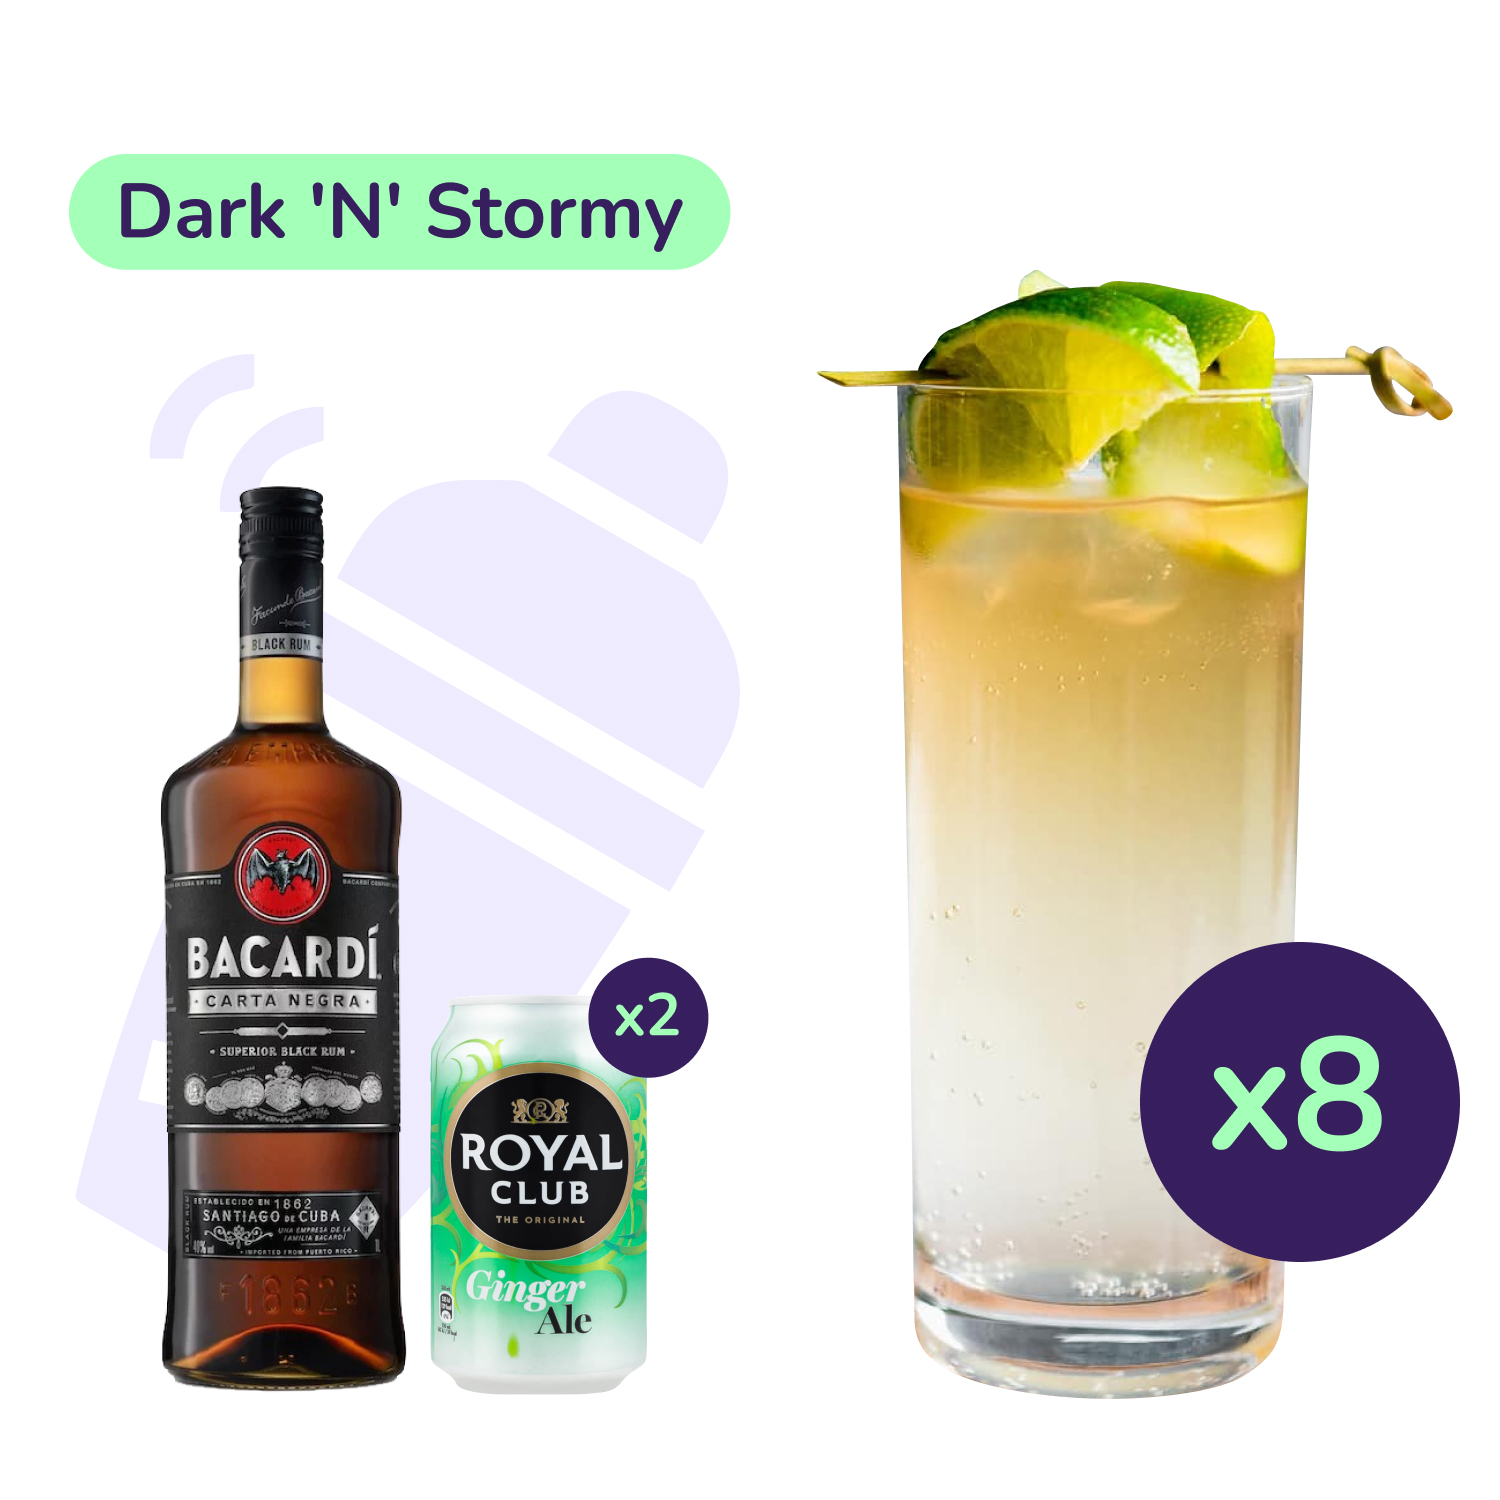 Коктейль Dark 'N' Stormy (набор ингредиентов) х8 на основе Bacardi - фото 1